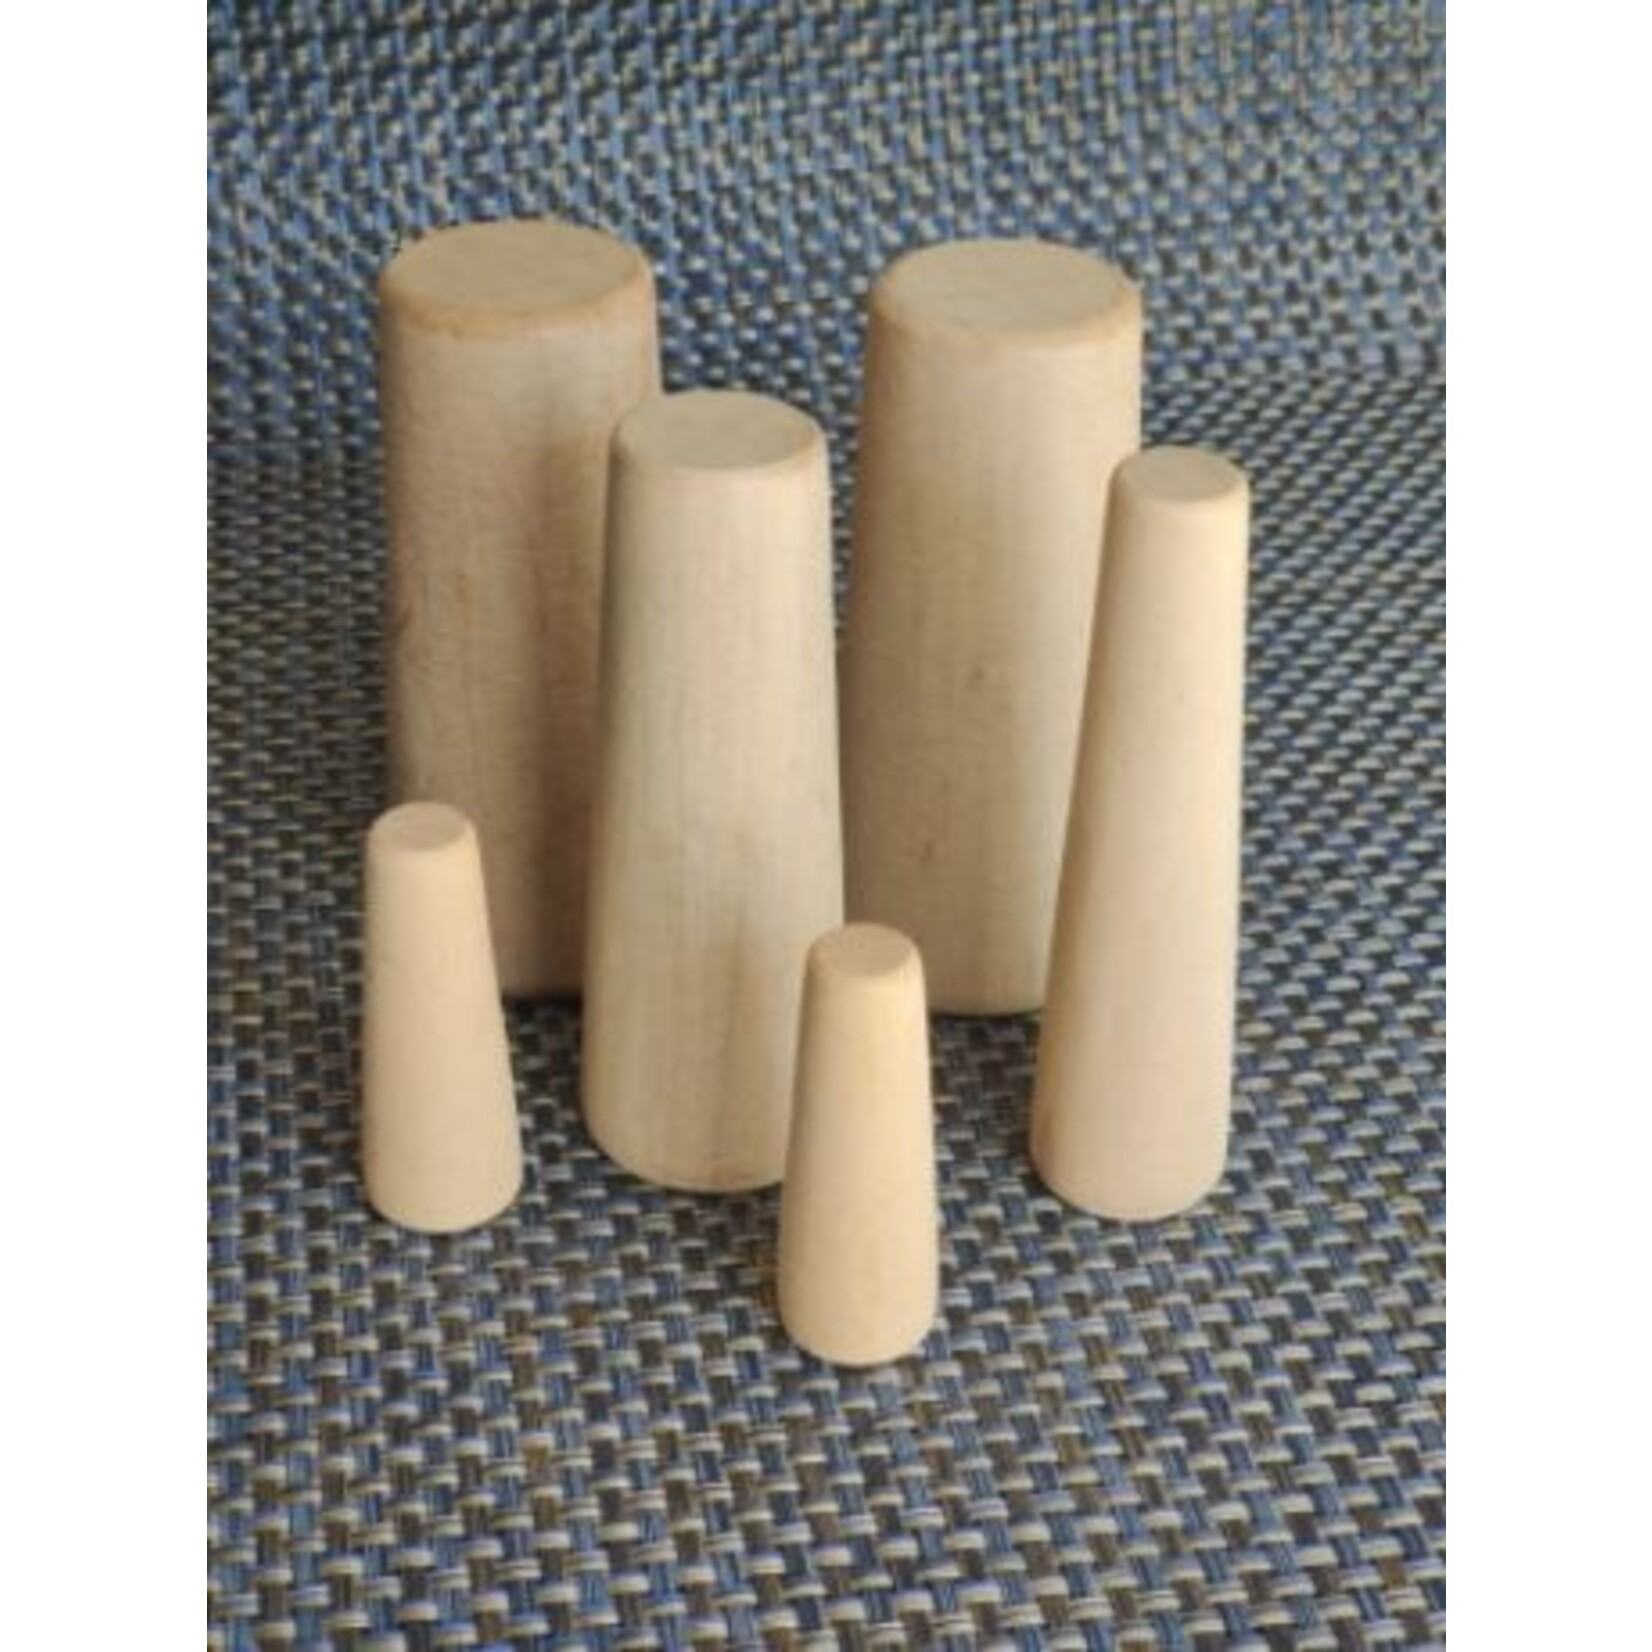 Plastimo Wooden plugs (x6)